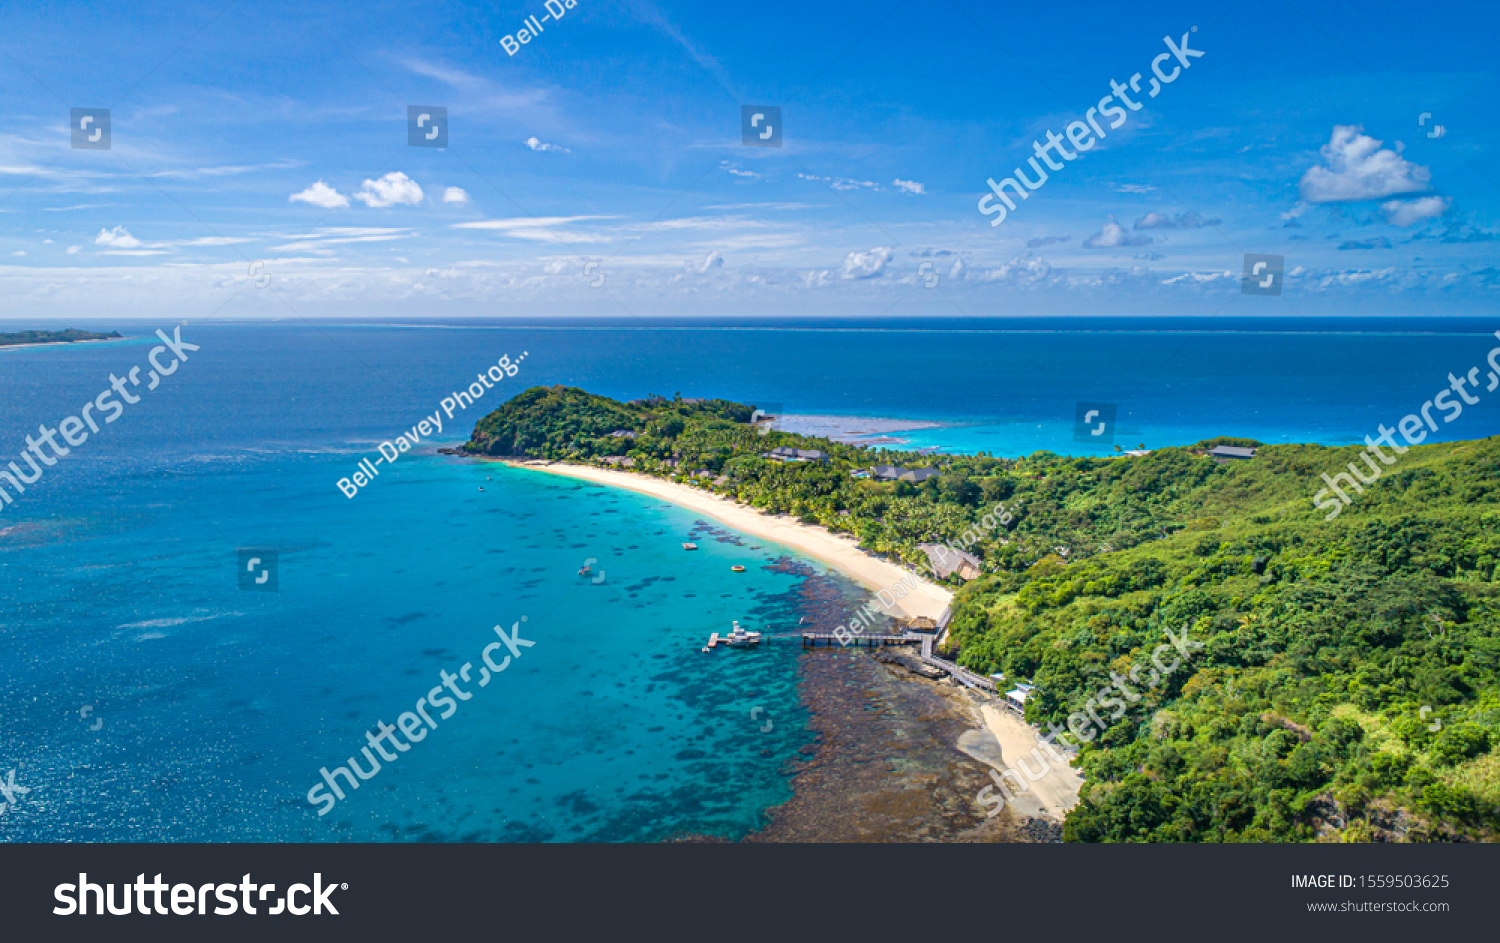 60 Kadavu island Images, Stock Photos & Vectors | Shutterstock